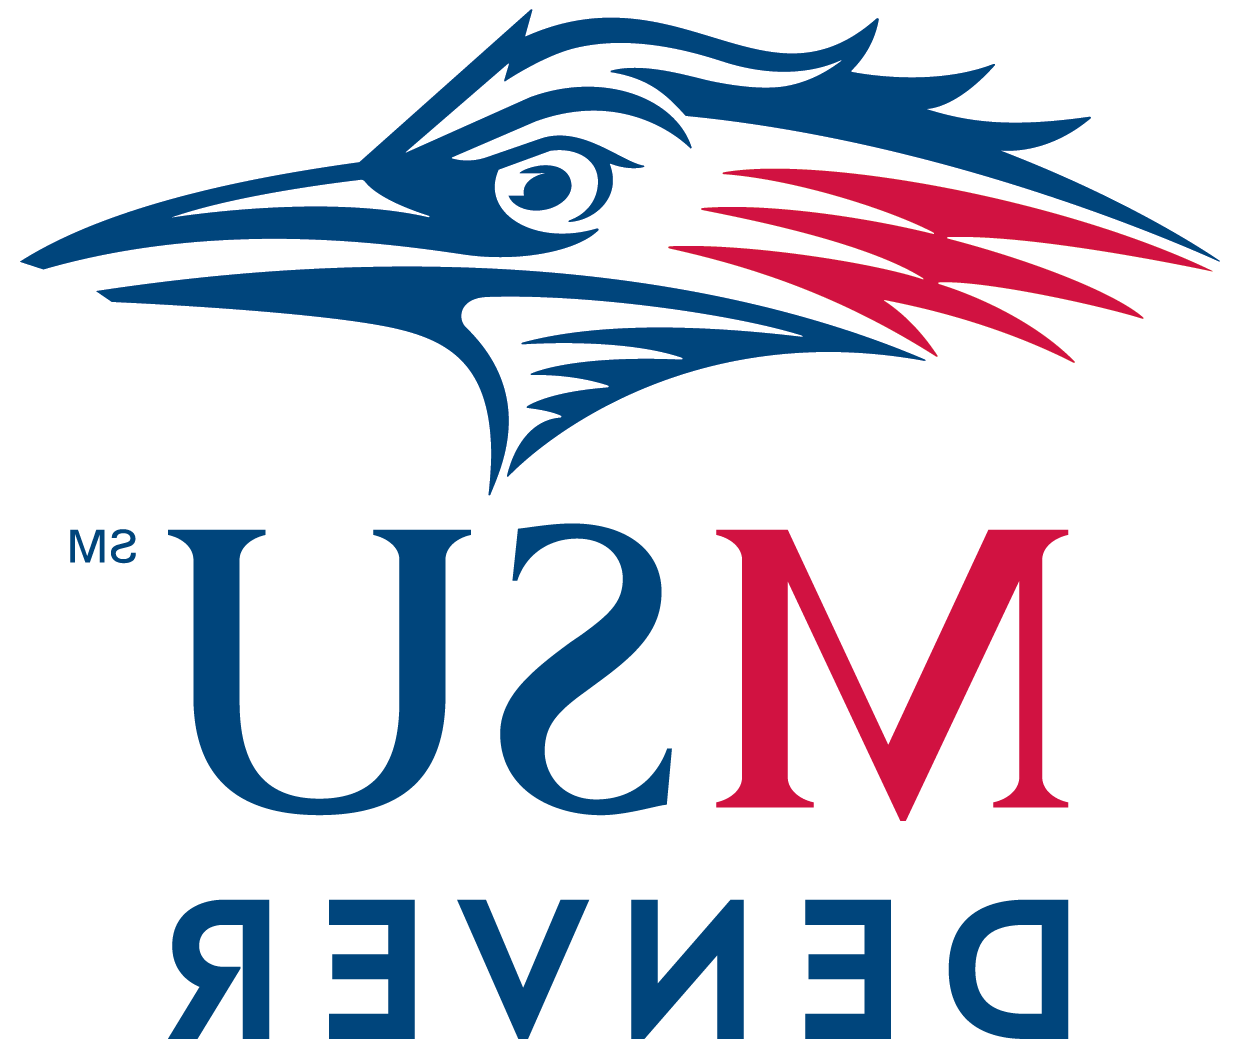 密歇根州立大学丹佛 logo of a blue, white 和 red roadrunner